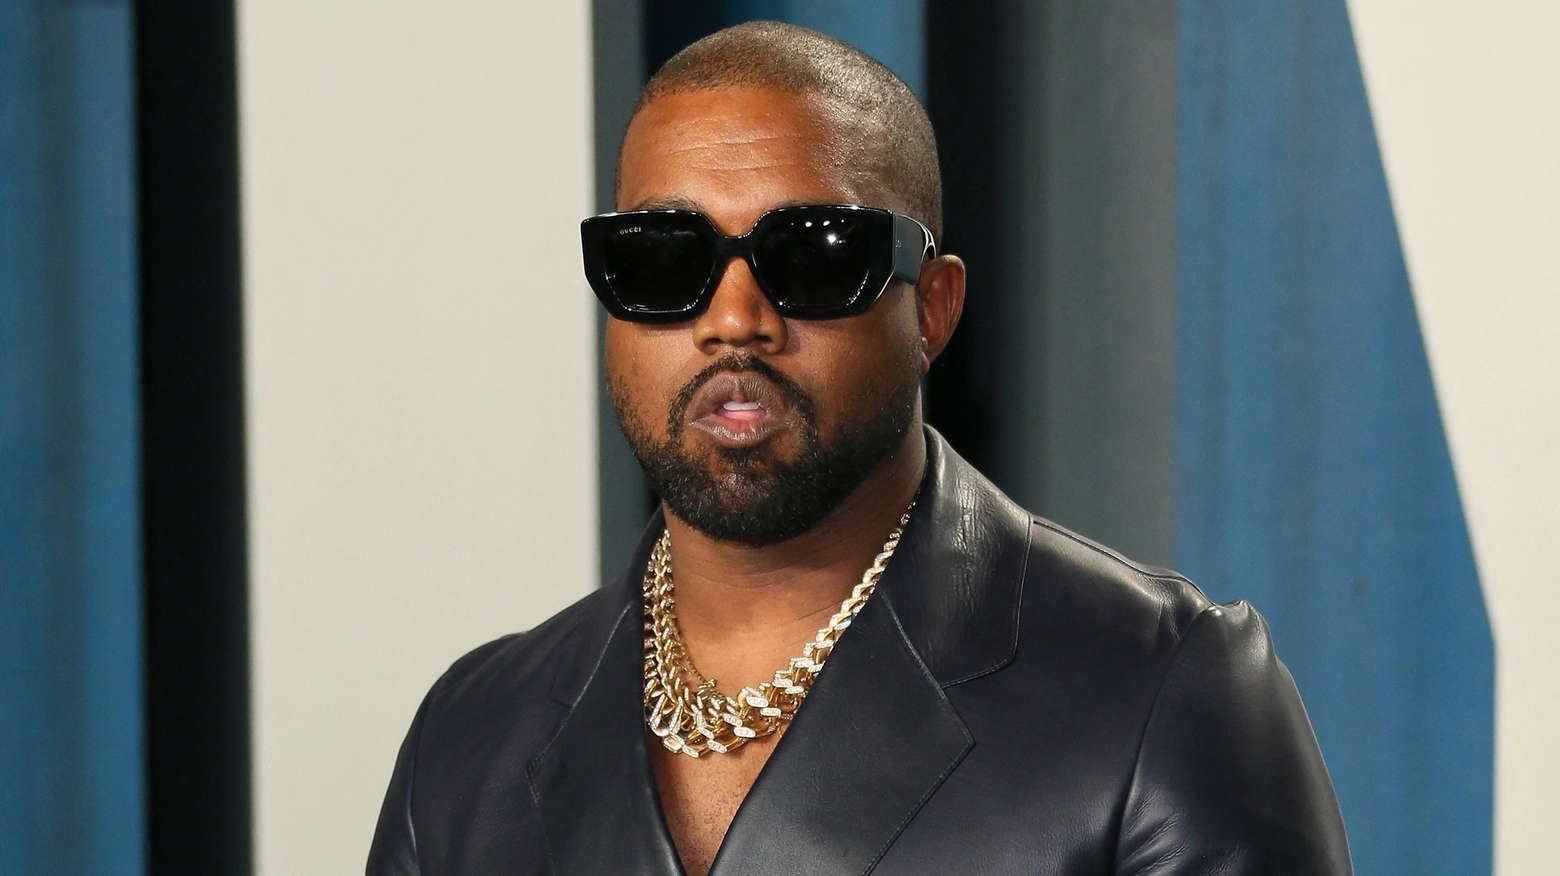 Il rapper americano Kanye West, sabato 24 a Bologna